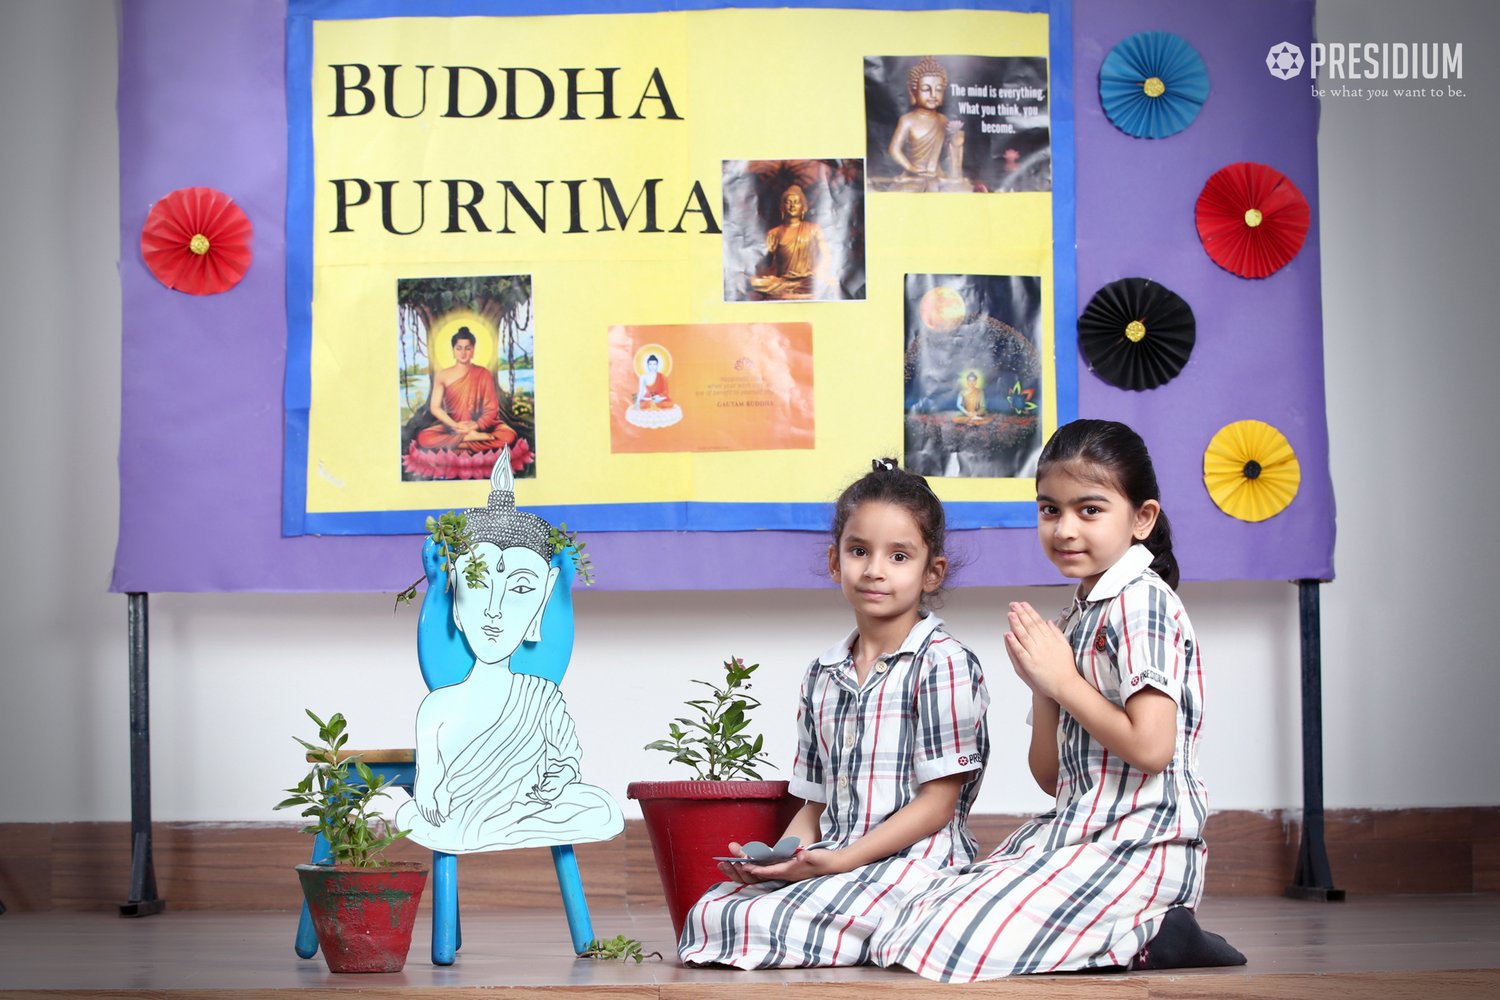 Presidium Pitampura, AN INFORMATIVE ASSEMBLY ON BUDDHA PURNIMA!